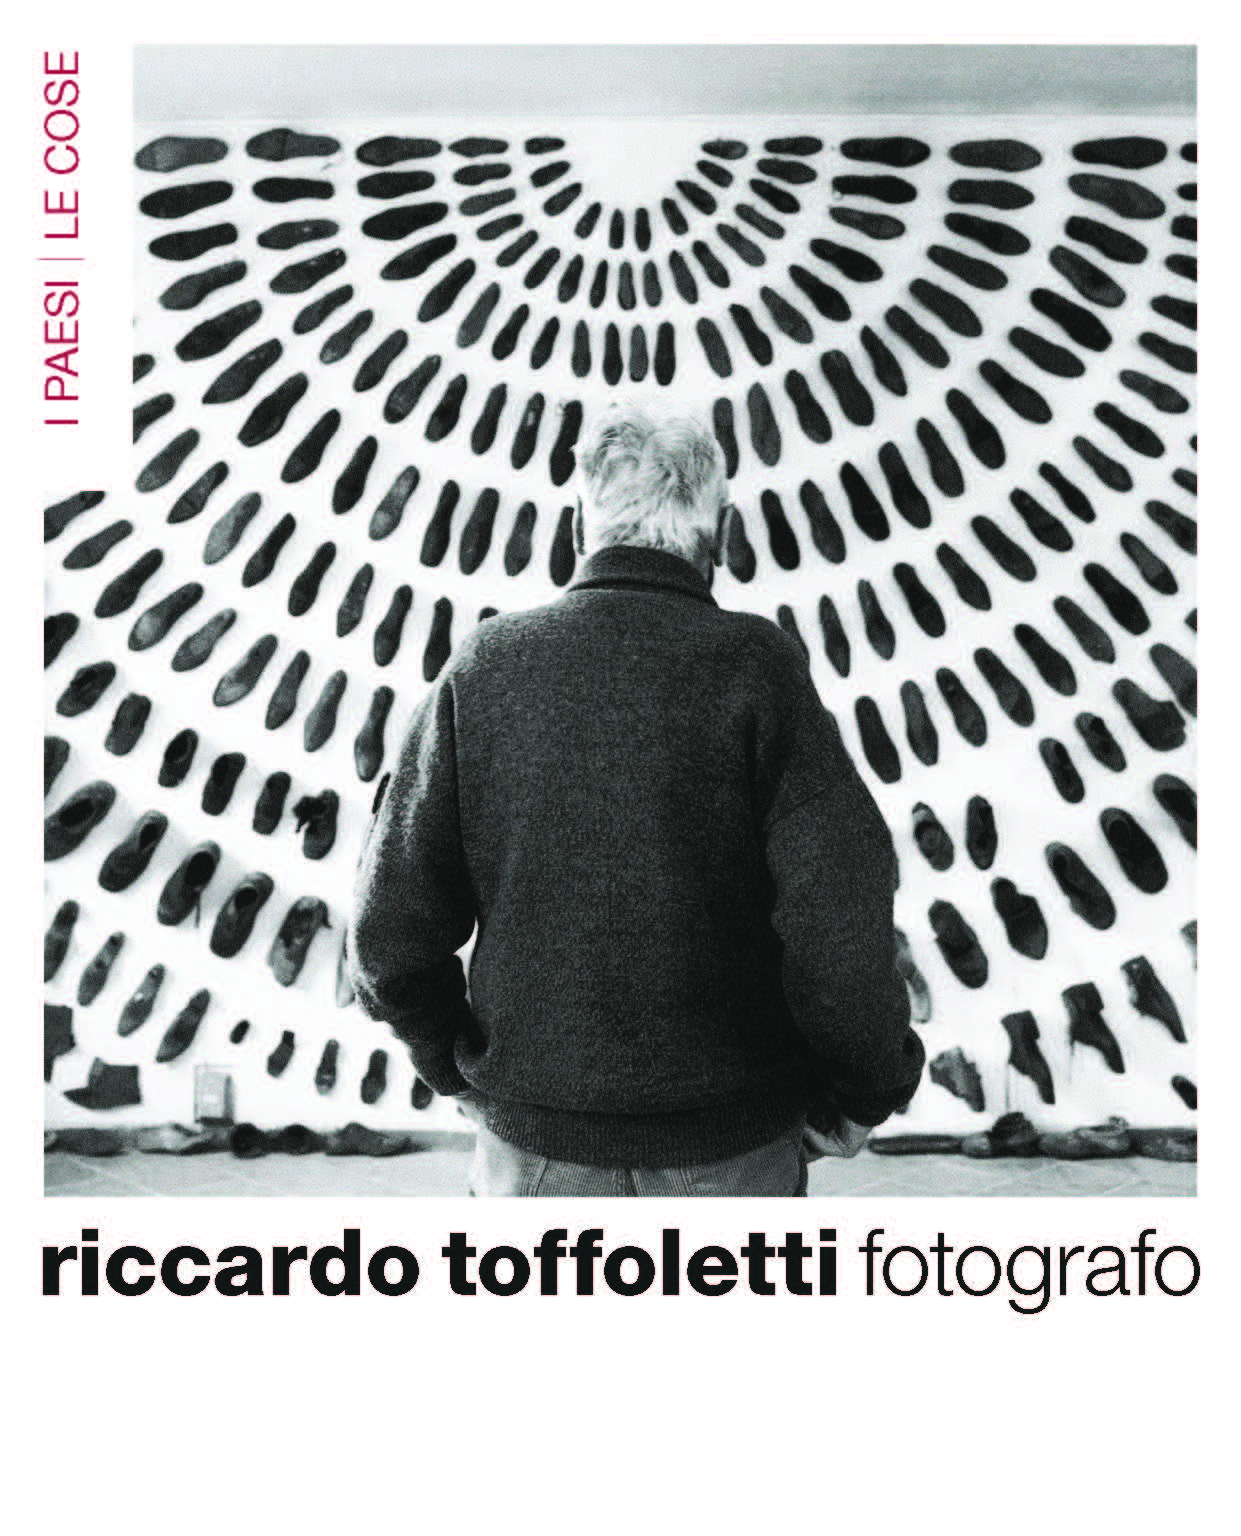 Riccardo Toffoletti fotografoe